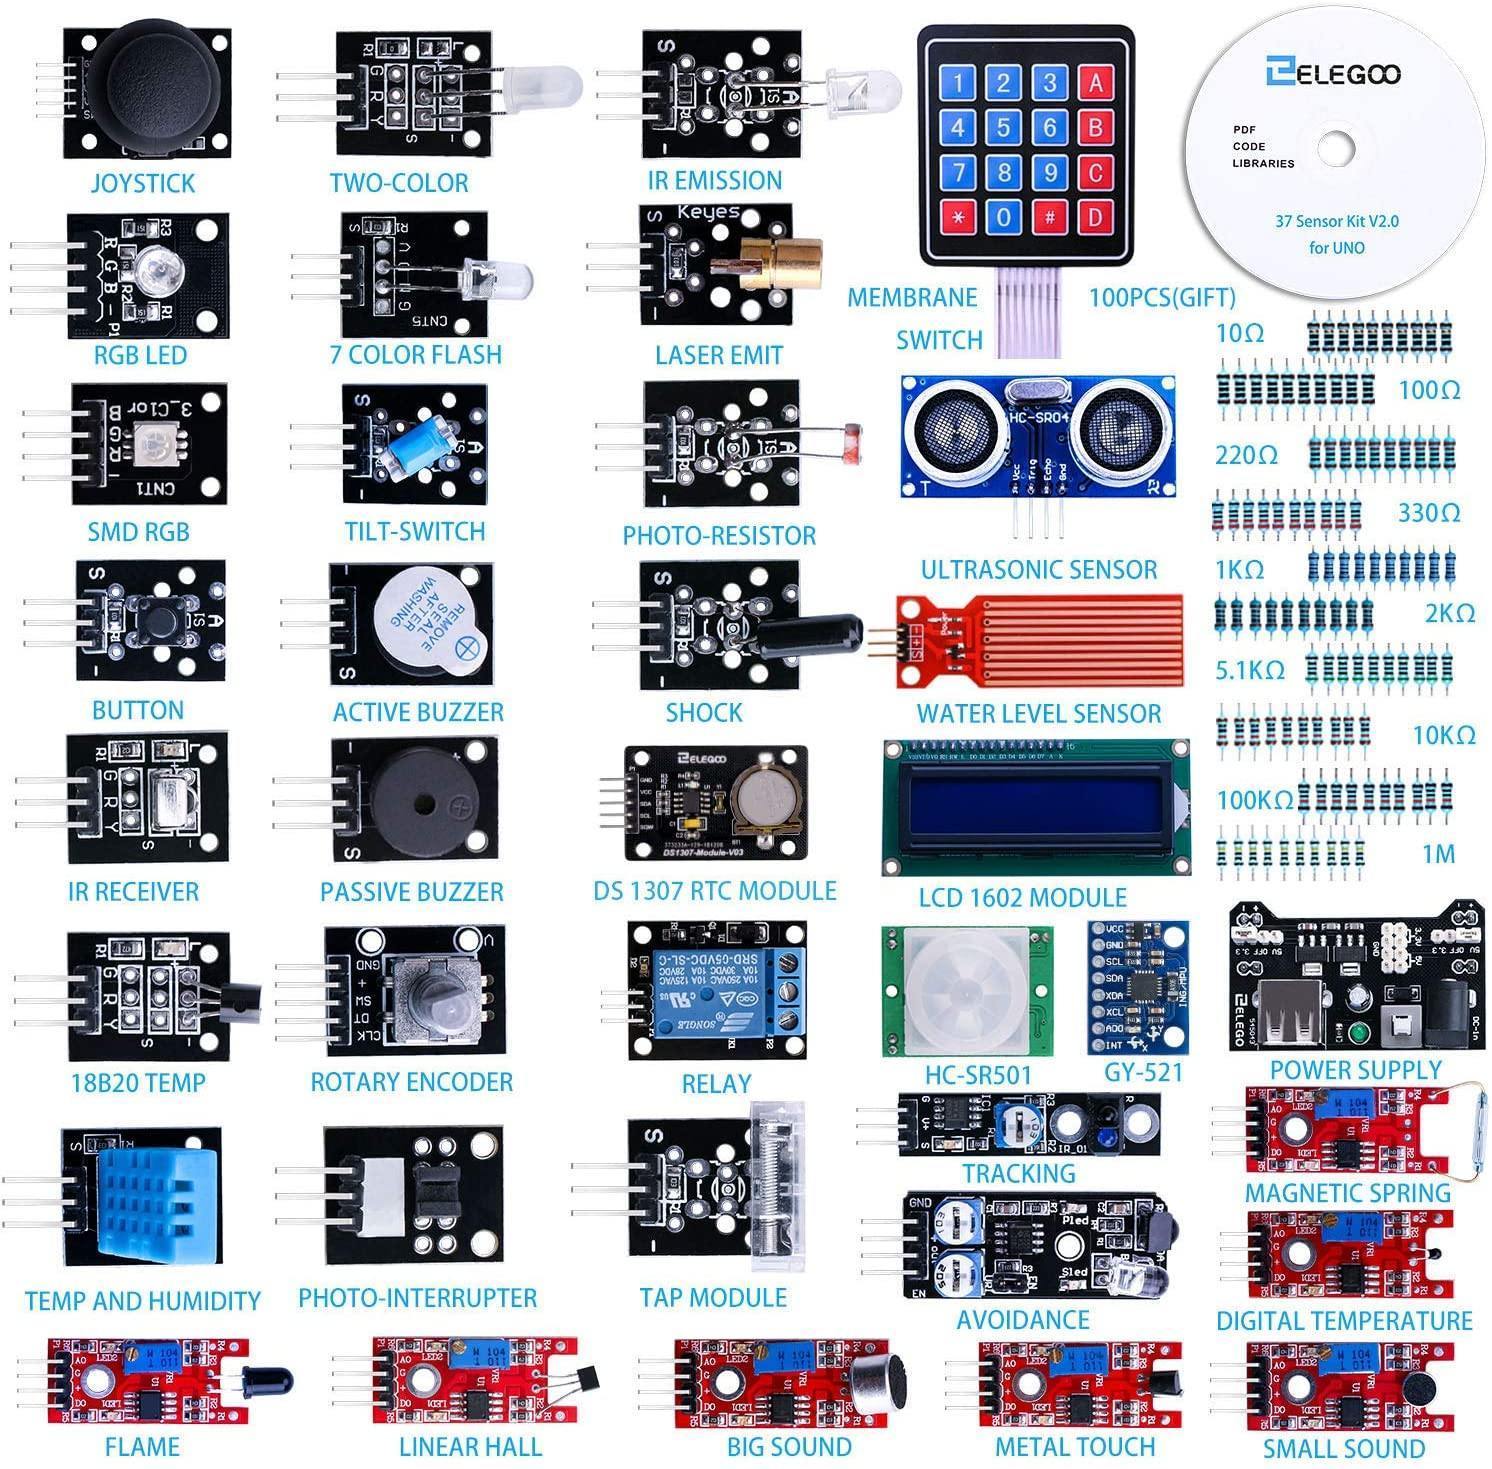 ELEGOO Upgraded 37 in 1 Sensor Modules Kit, Compatible with Arduino IDE Arduino STEM Kits elegoo-shop 